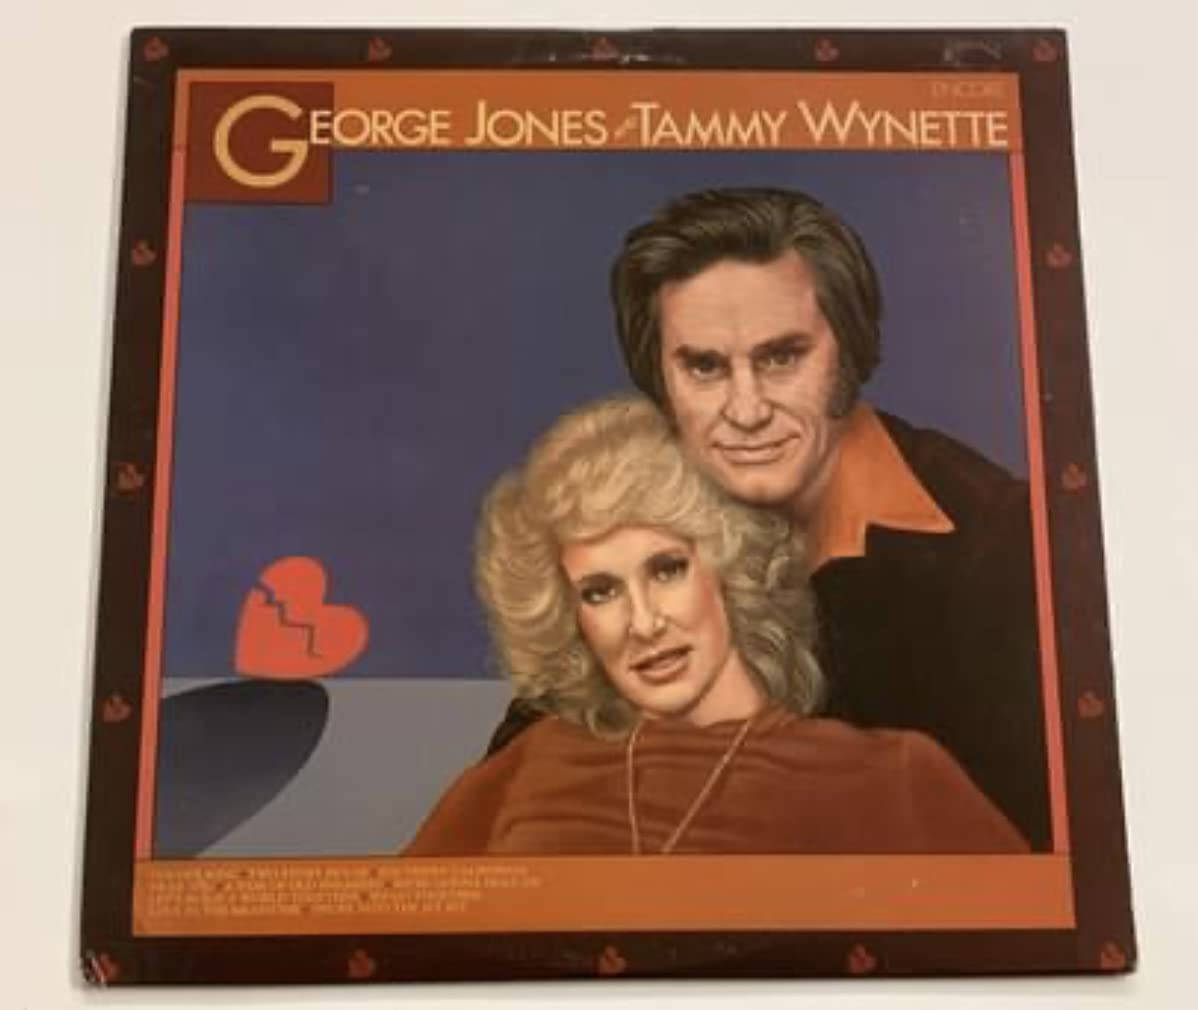 George Jones Tammy Wynette Art Background